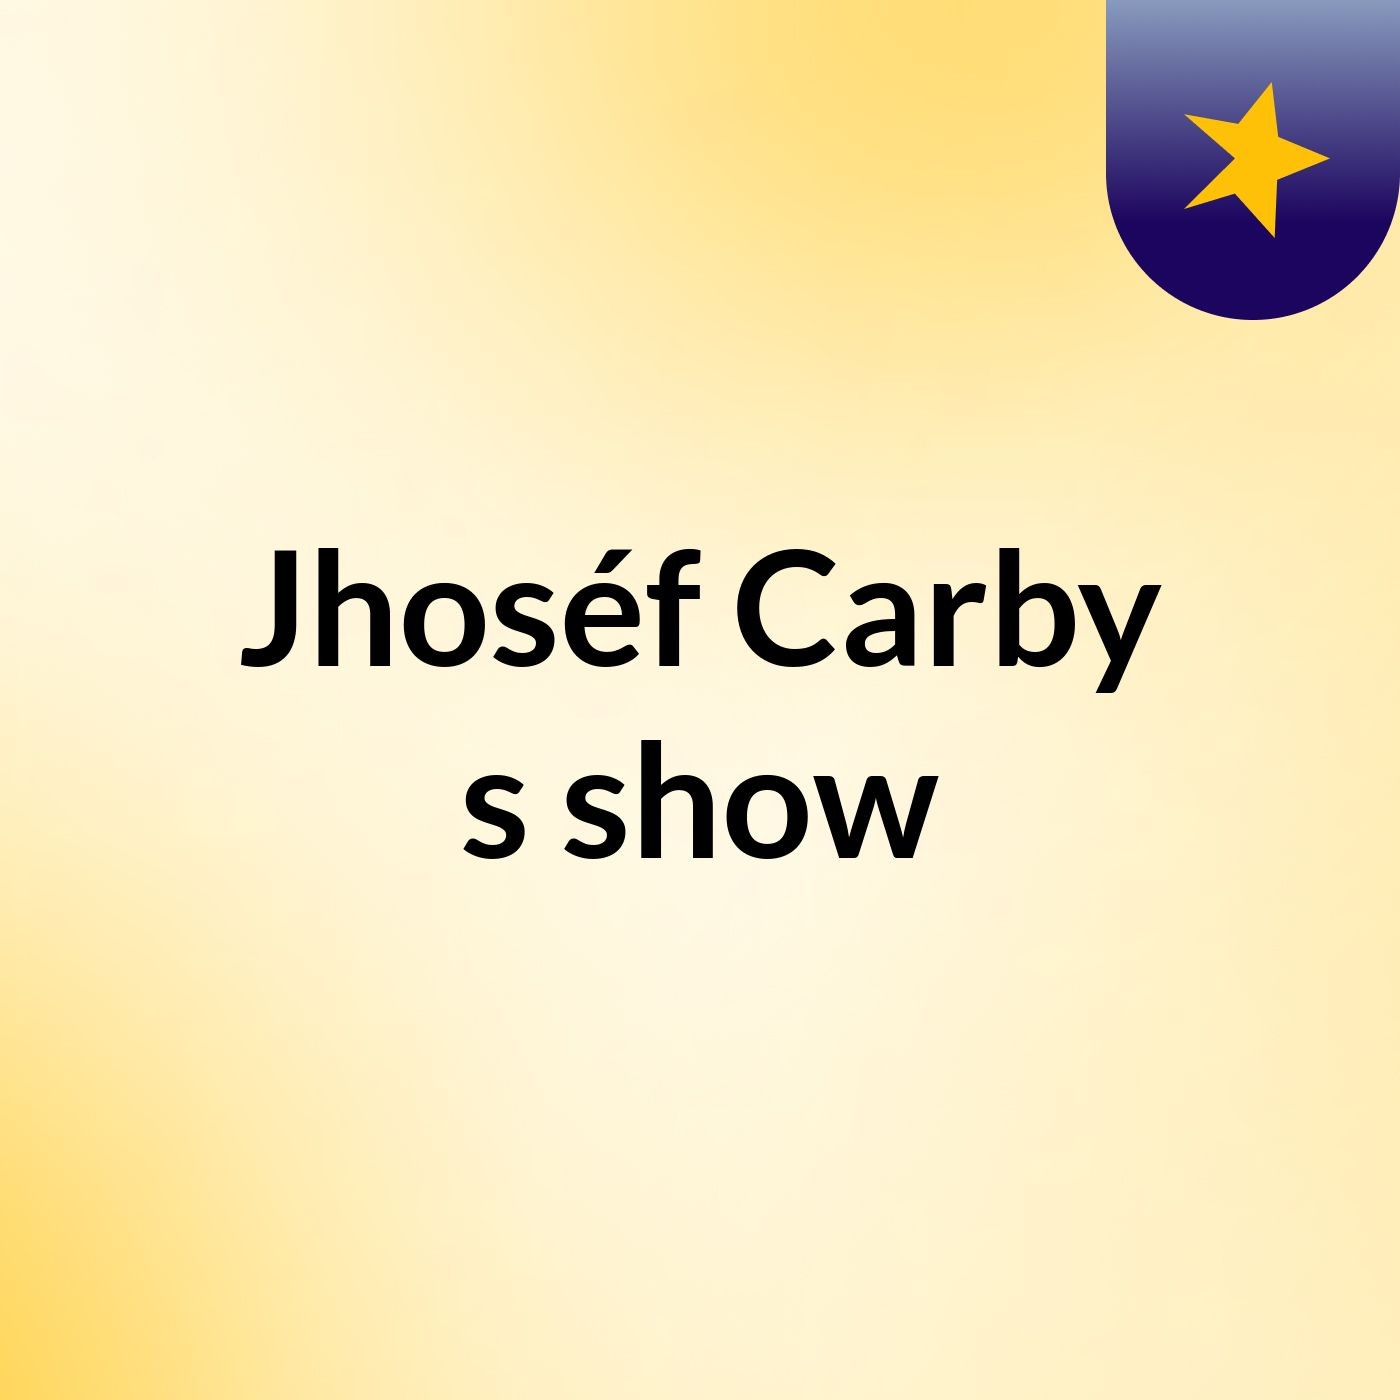 Jhoséf Carby's show